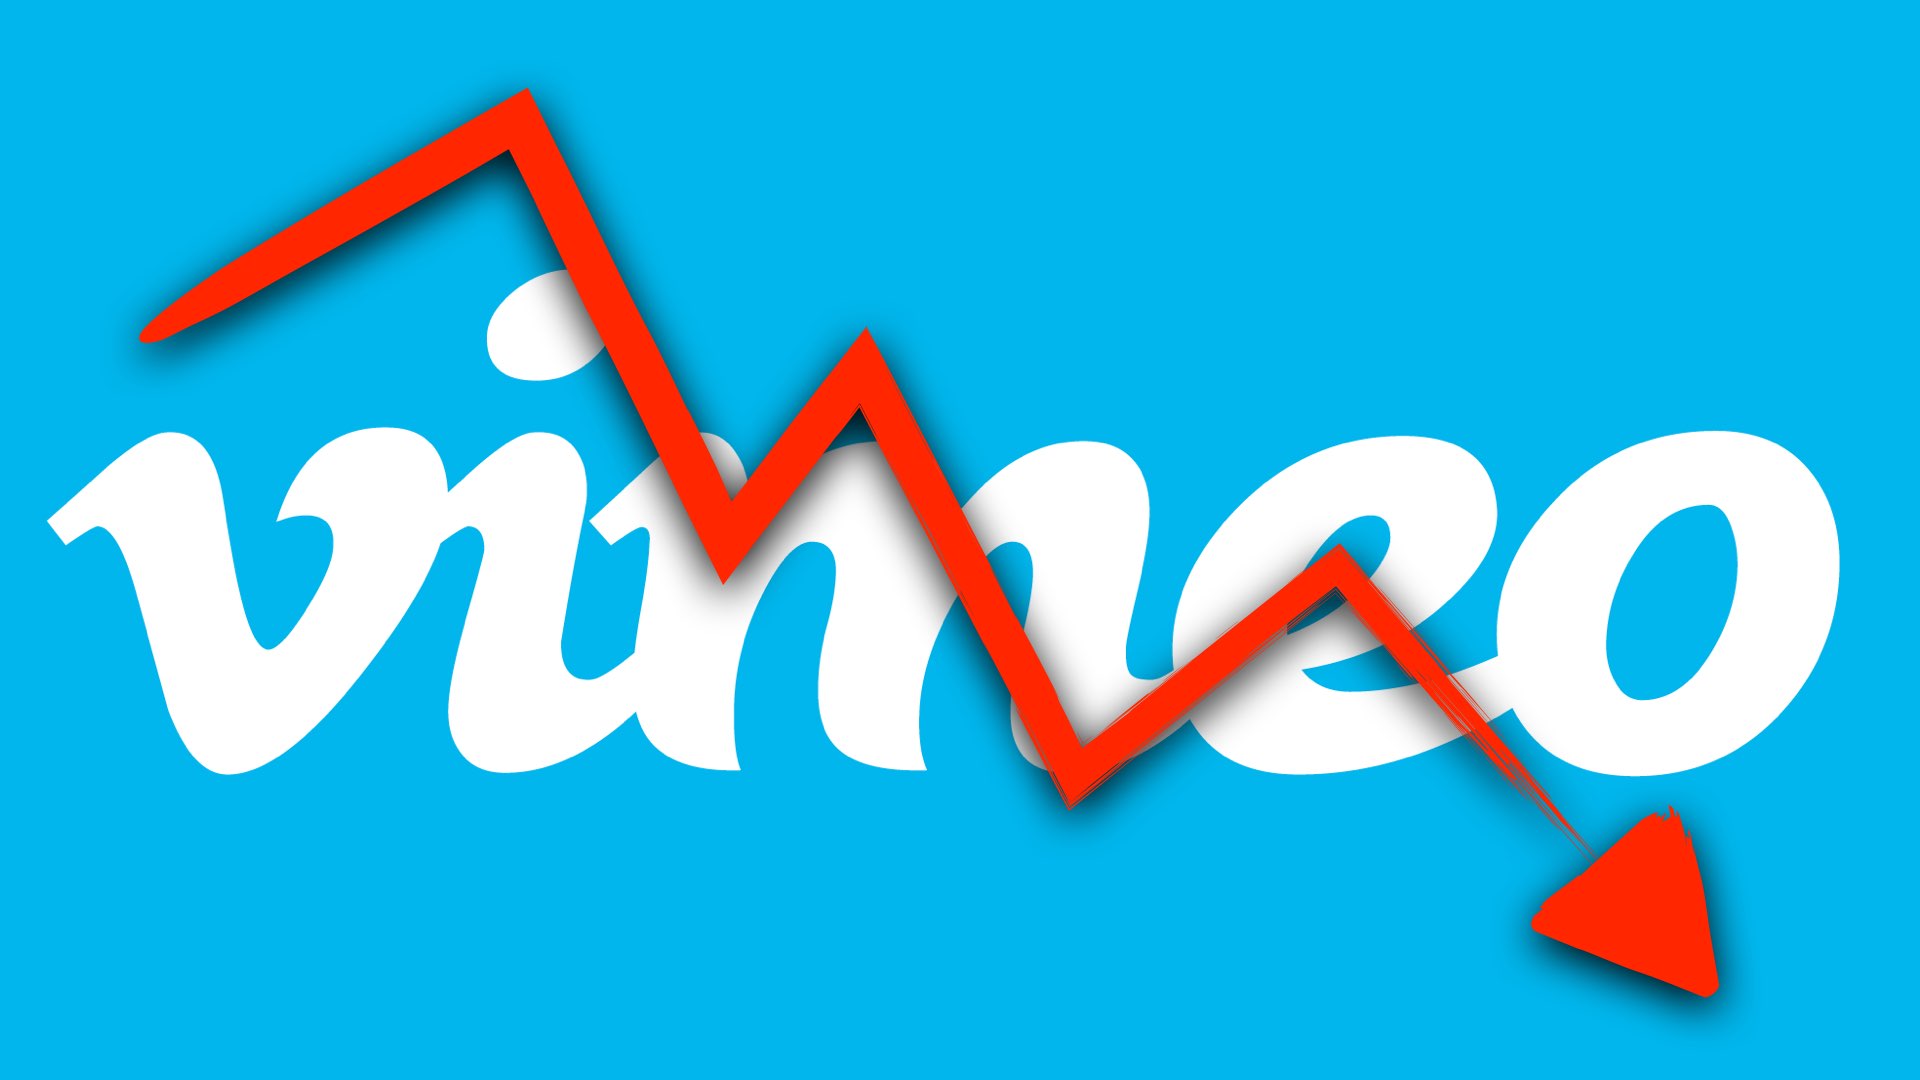 Vimeo is Going Down Reducing Workforce By 6% - YMCinema